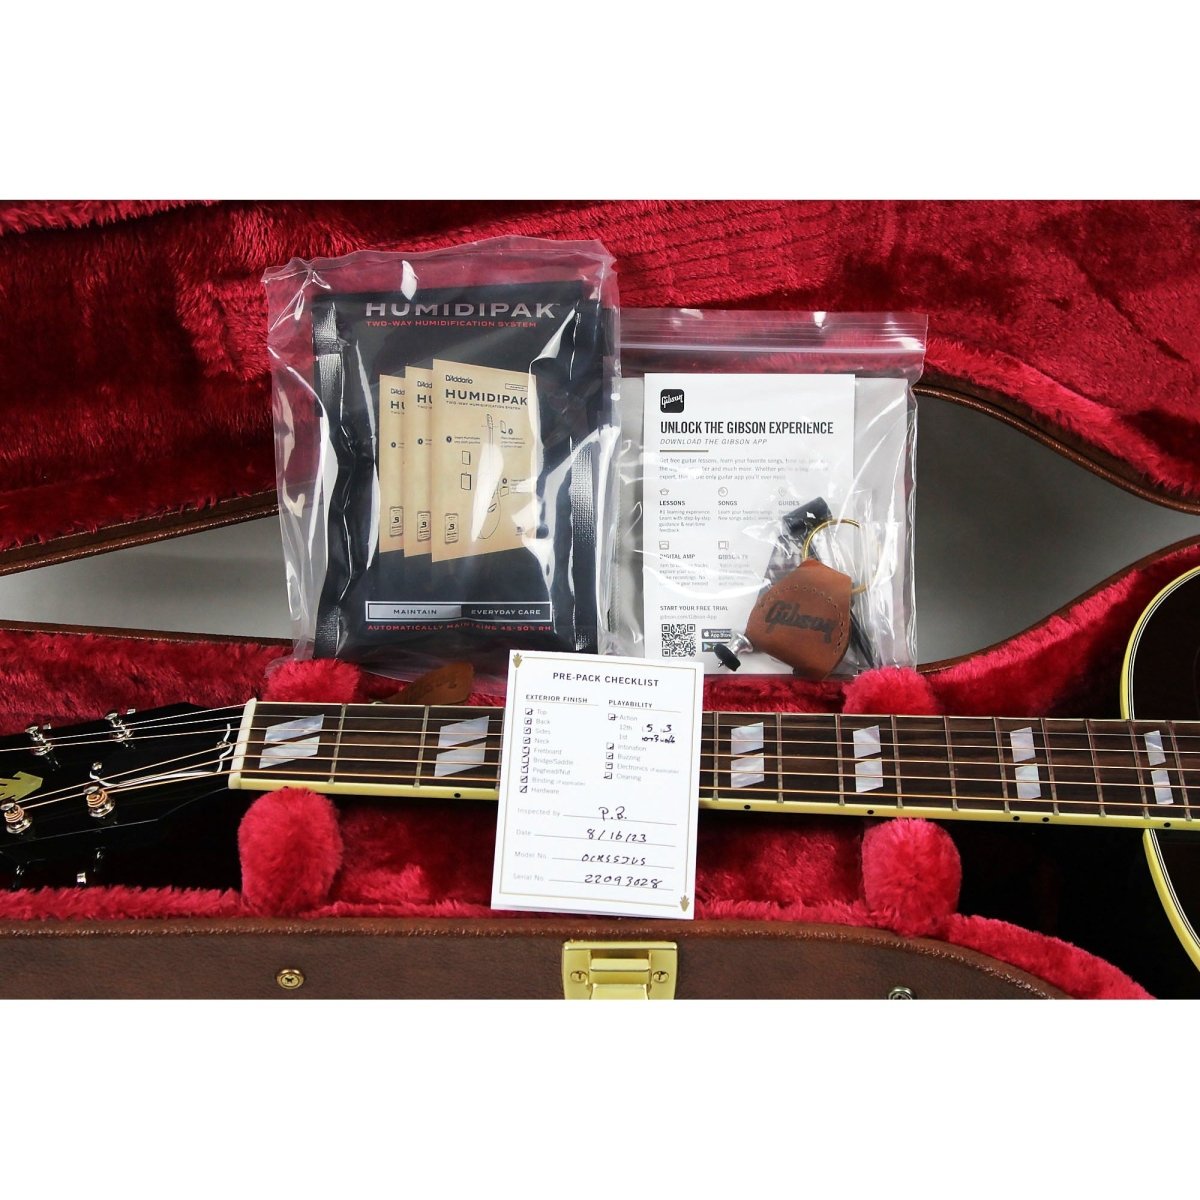 Gibson Acoustic Southern Jumbo Original - Vintage Sunburst - Leitz Music-711106037011-OCRSSJVS